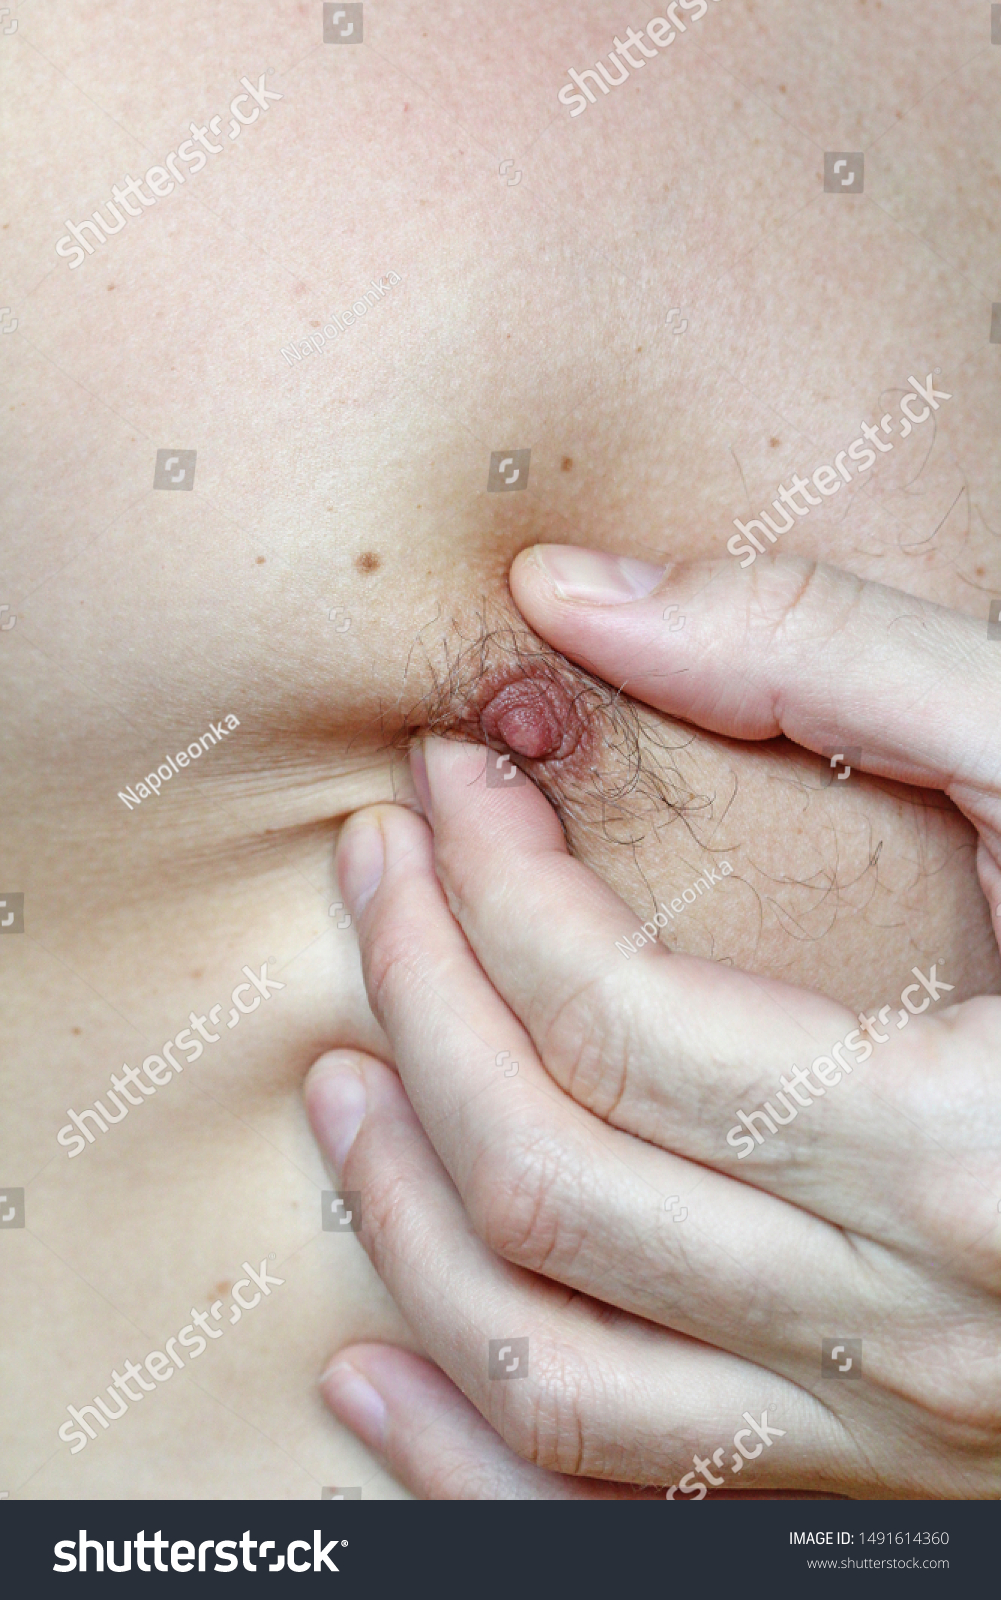 Hairy Girls Nipples